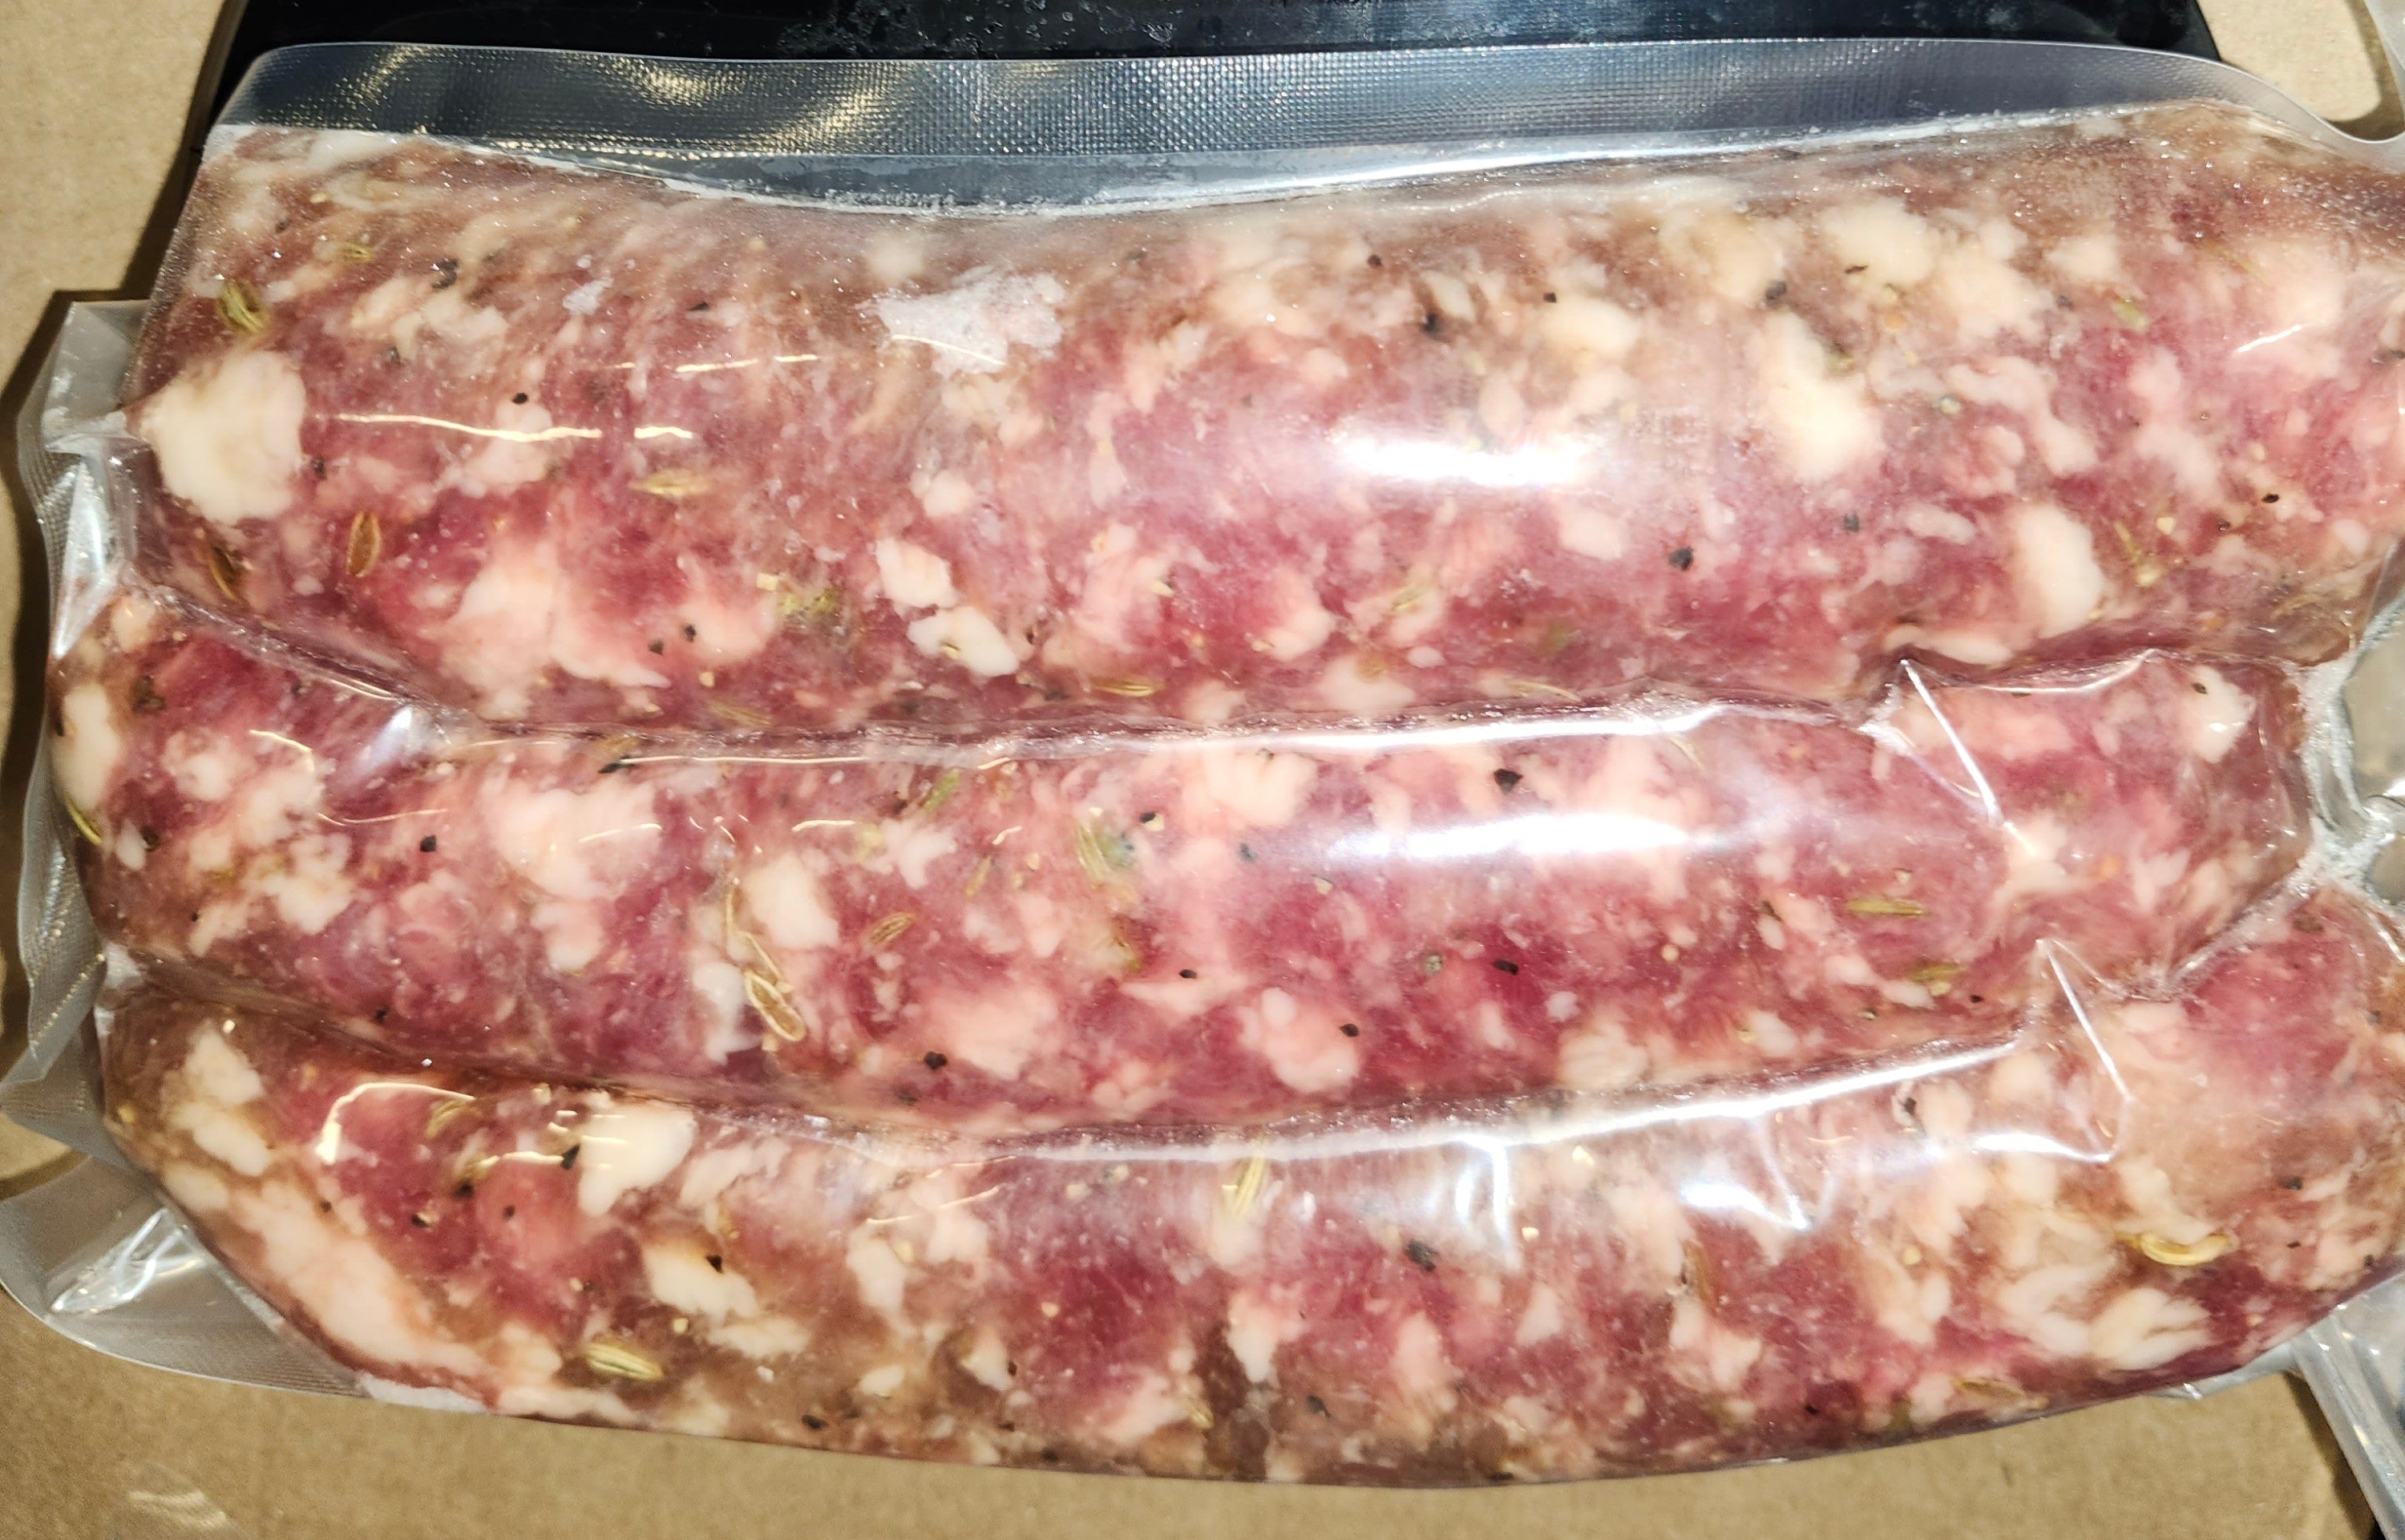 Pork - 2 x 3-packs of 7" large gluten-free mild Italian Sausages